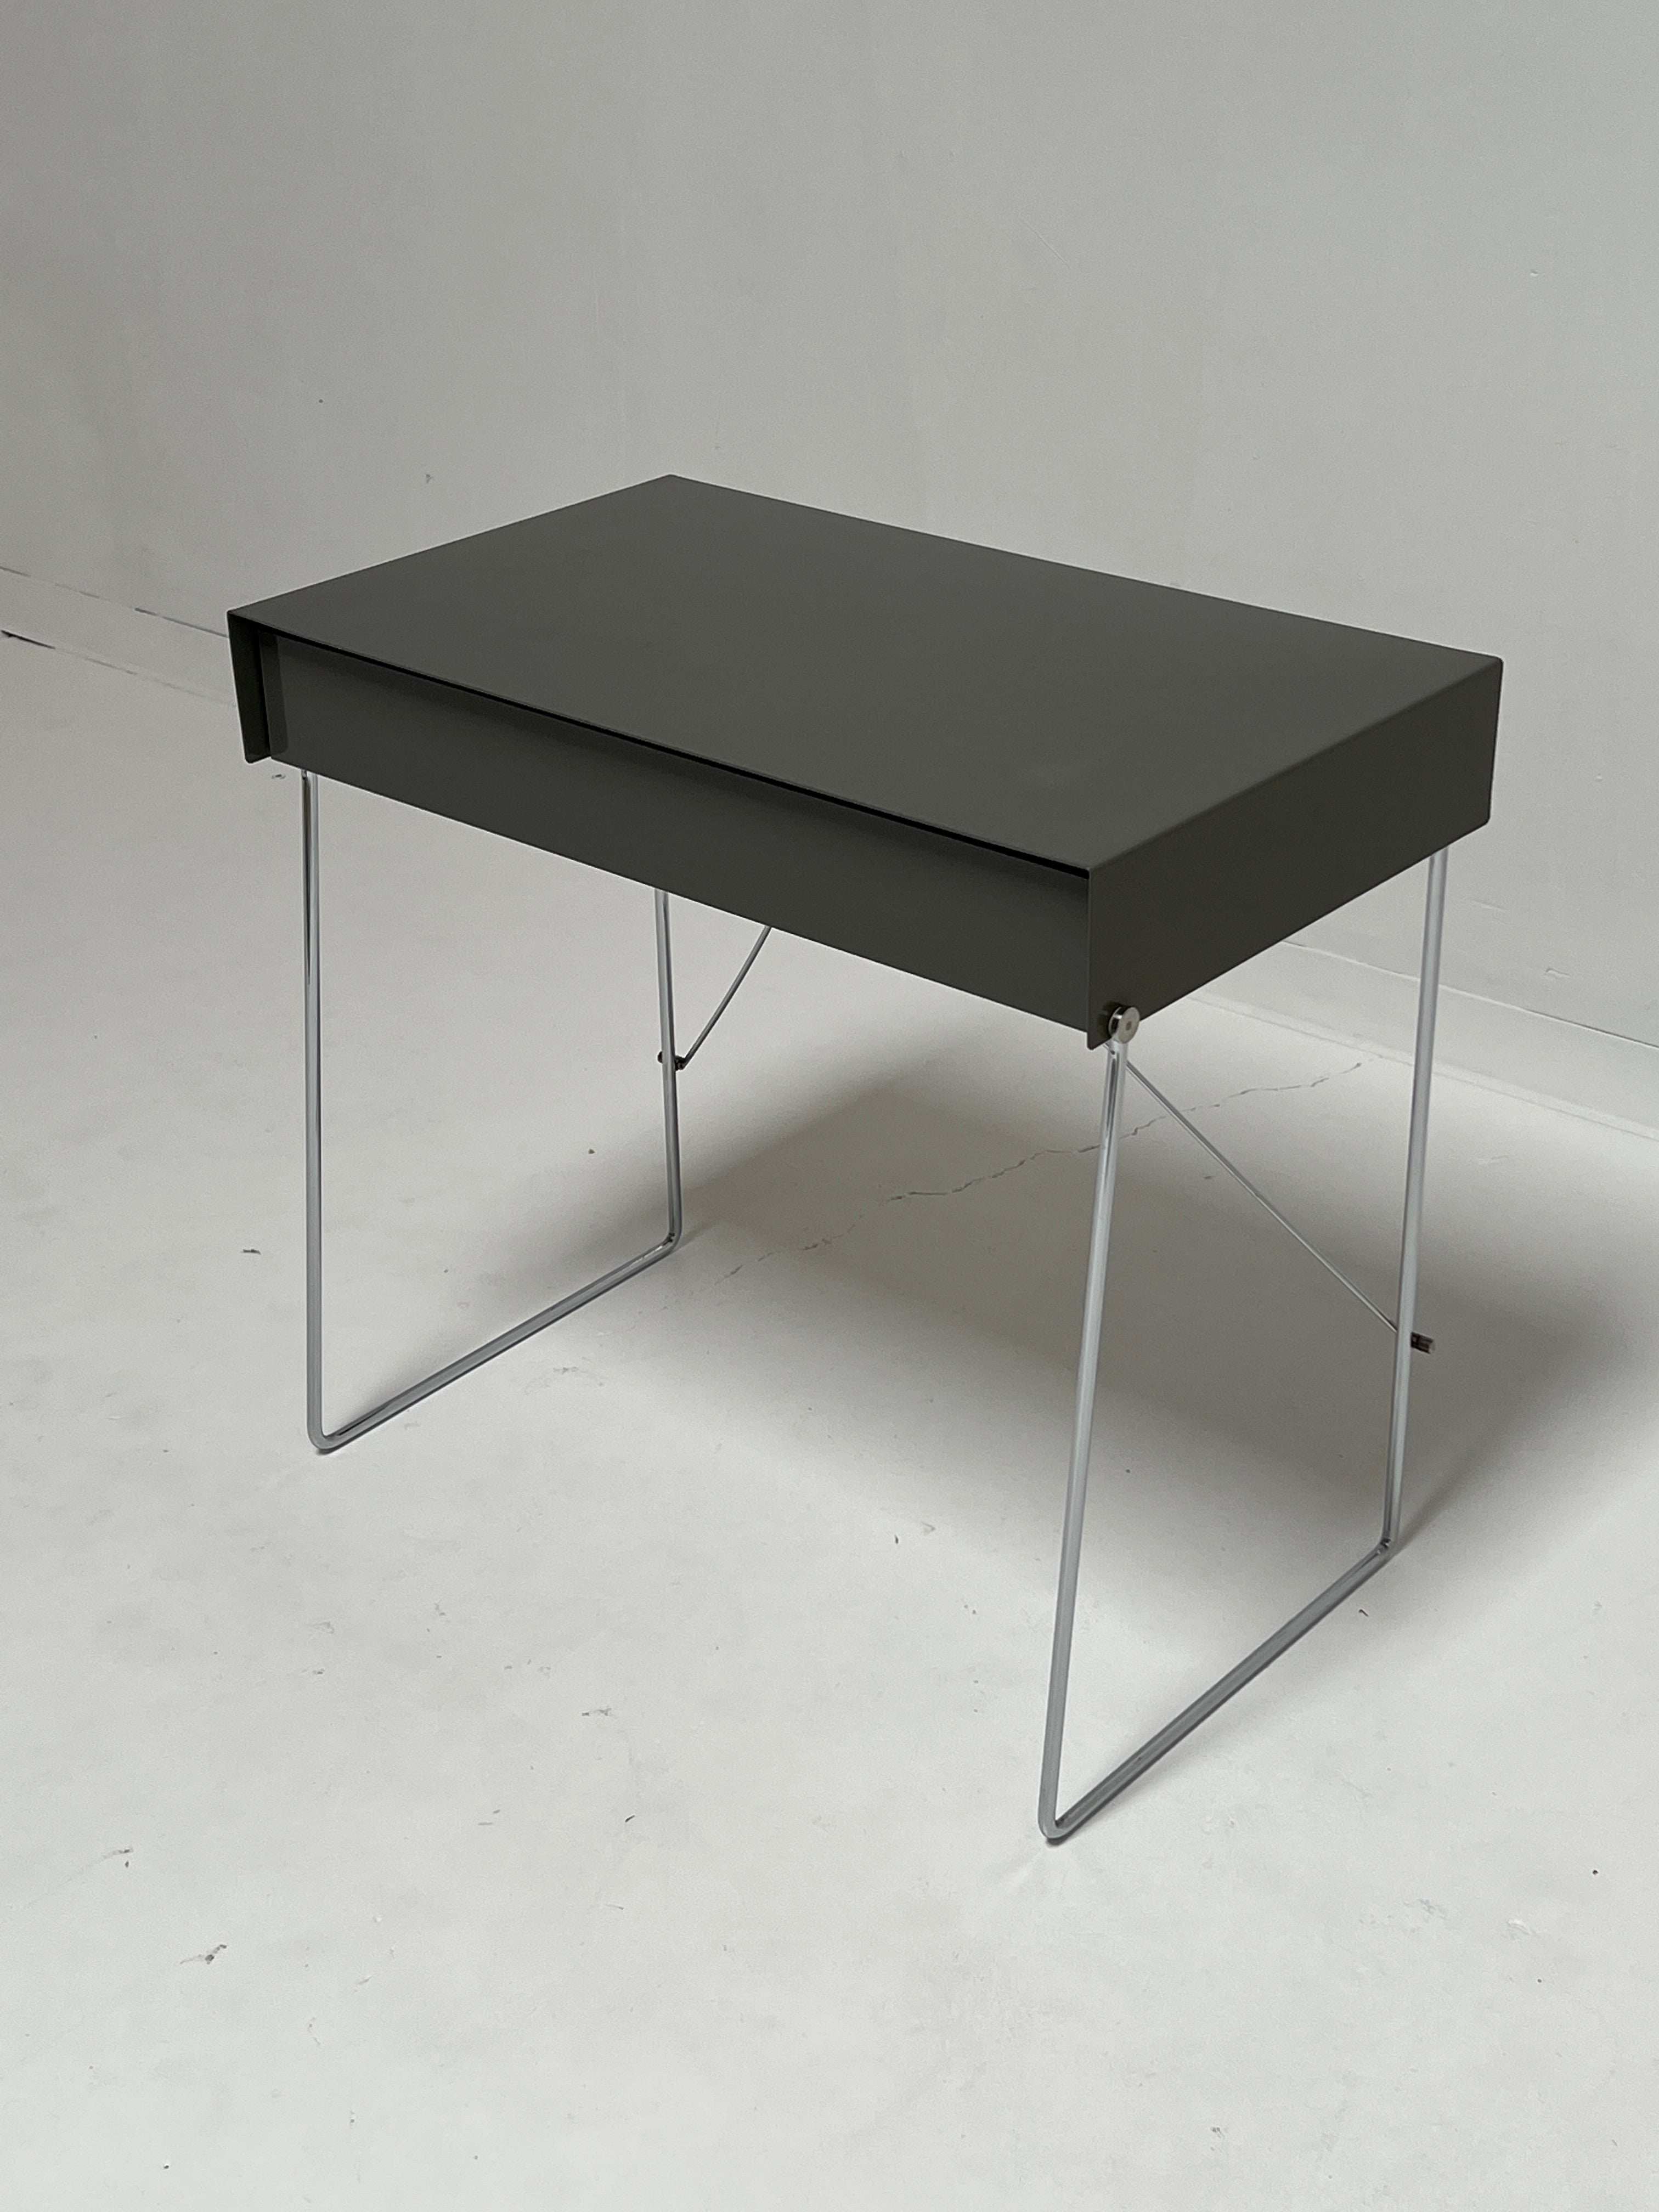 Grey & Chrome Desk by Blu Dot